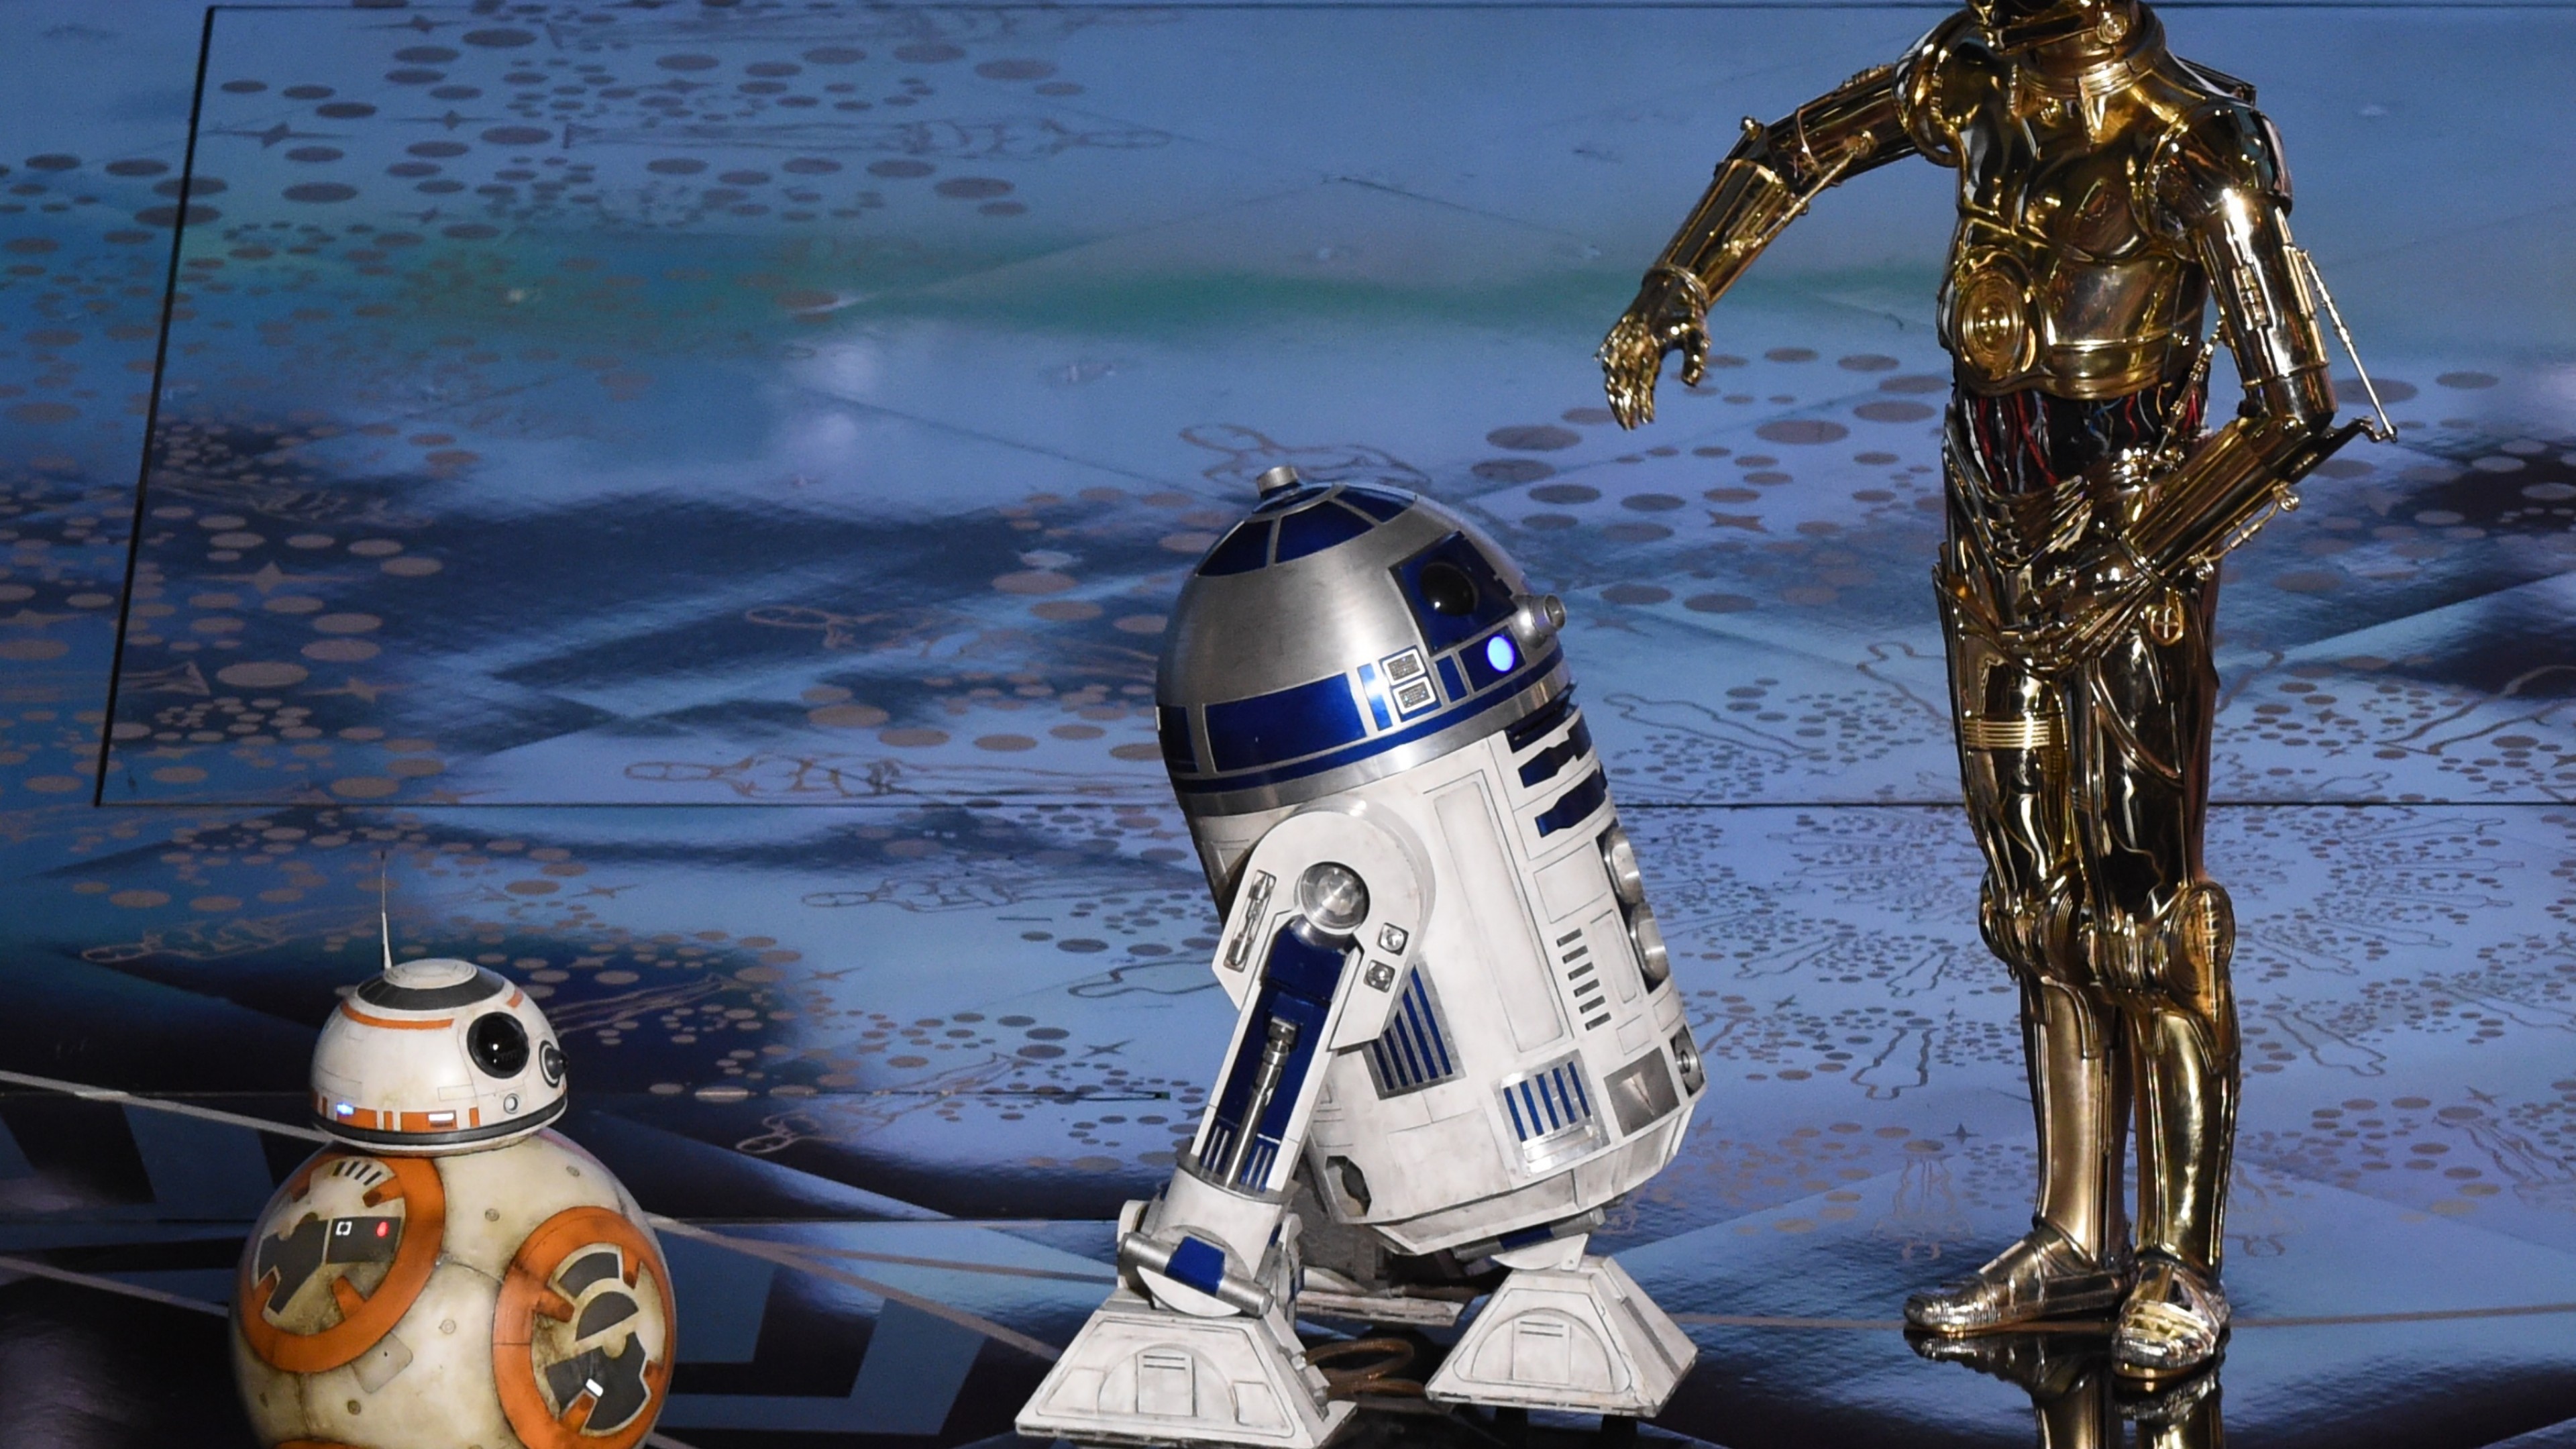 HD Wallpaper For Theme: R2 D2 HD Wallpaper, Background